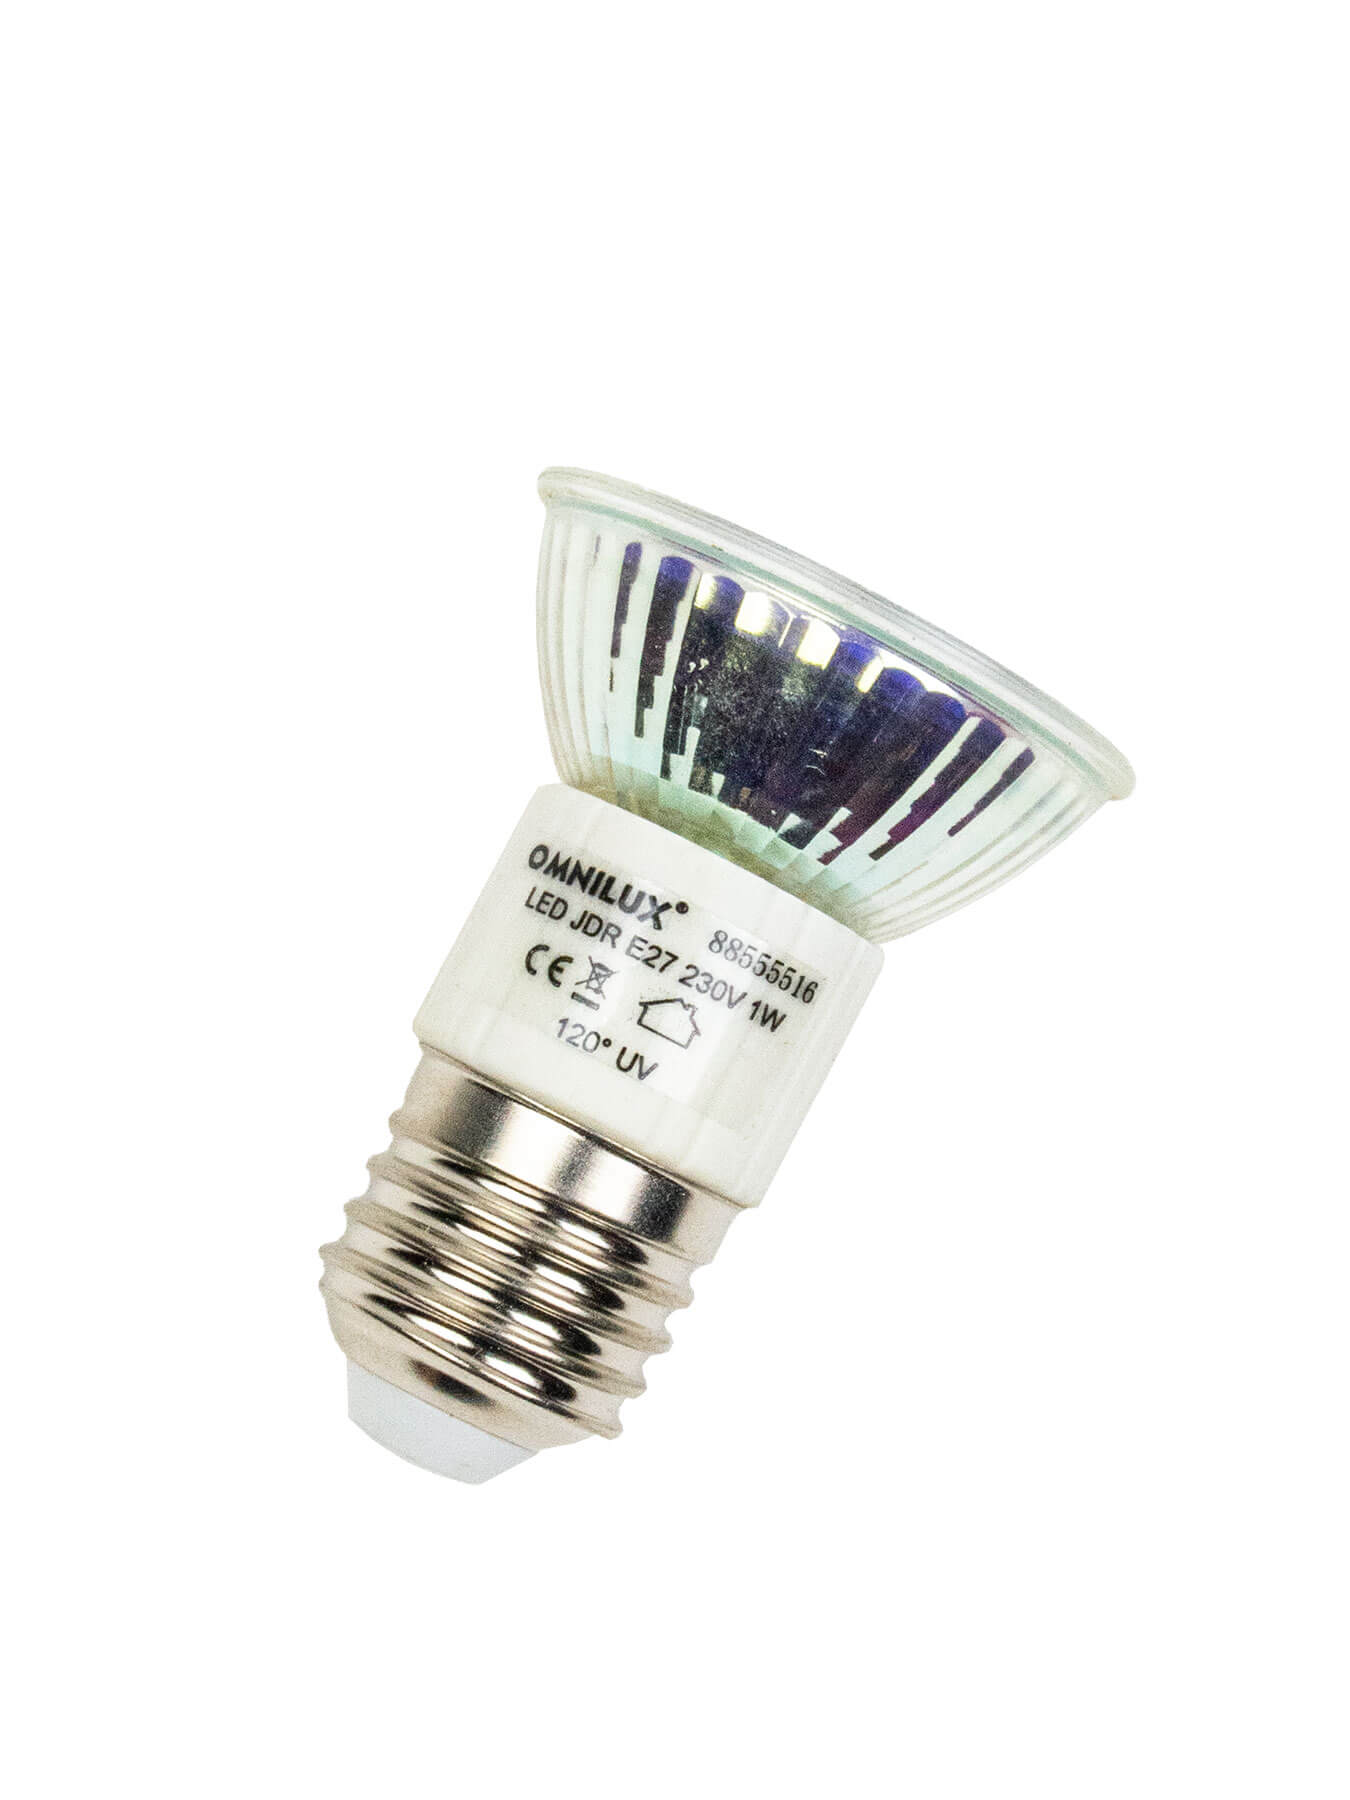 OMNILUX UV Schwarzlicht Energiesparlampe 105W E-27 4U 255mm 